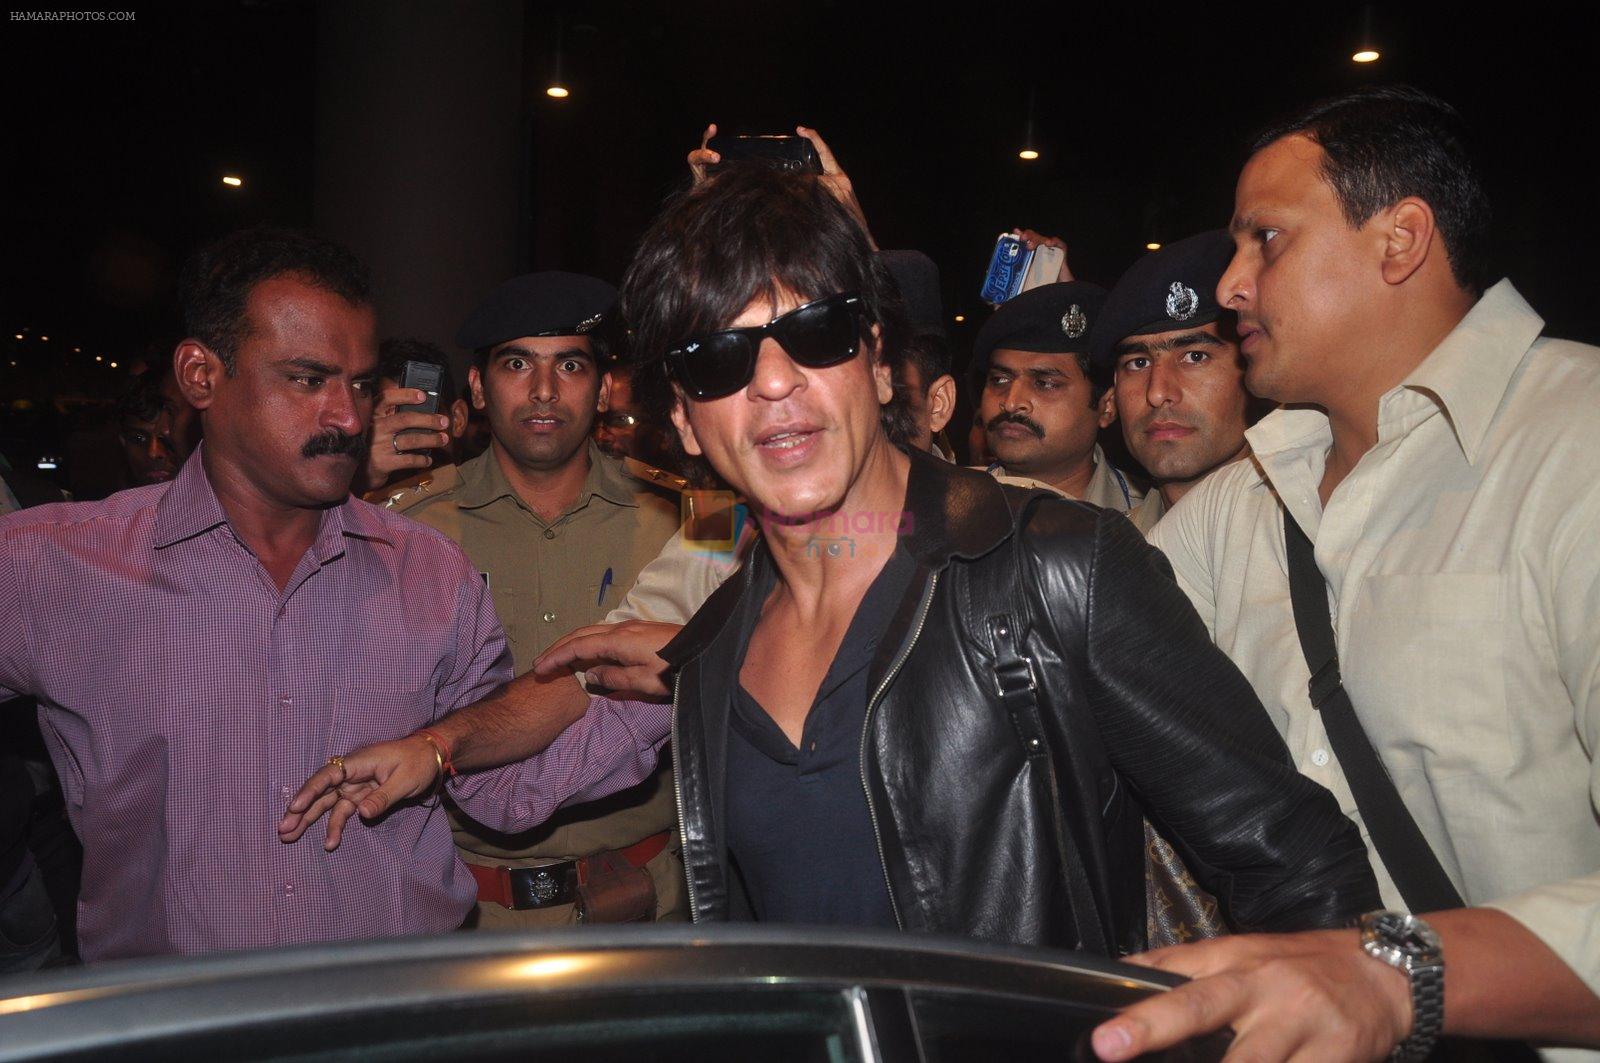 Shahrukh Khan snapped at airport in Mumbai on 4th Jan 2014